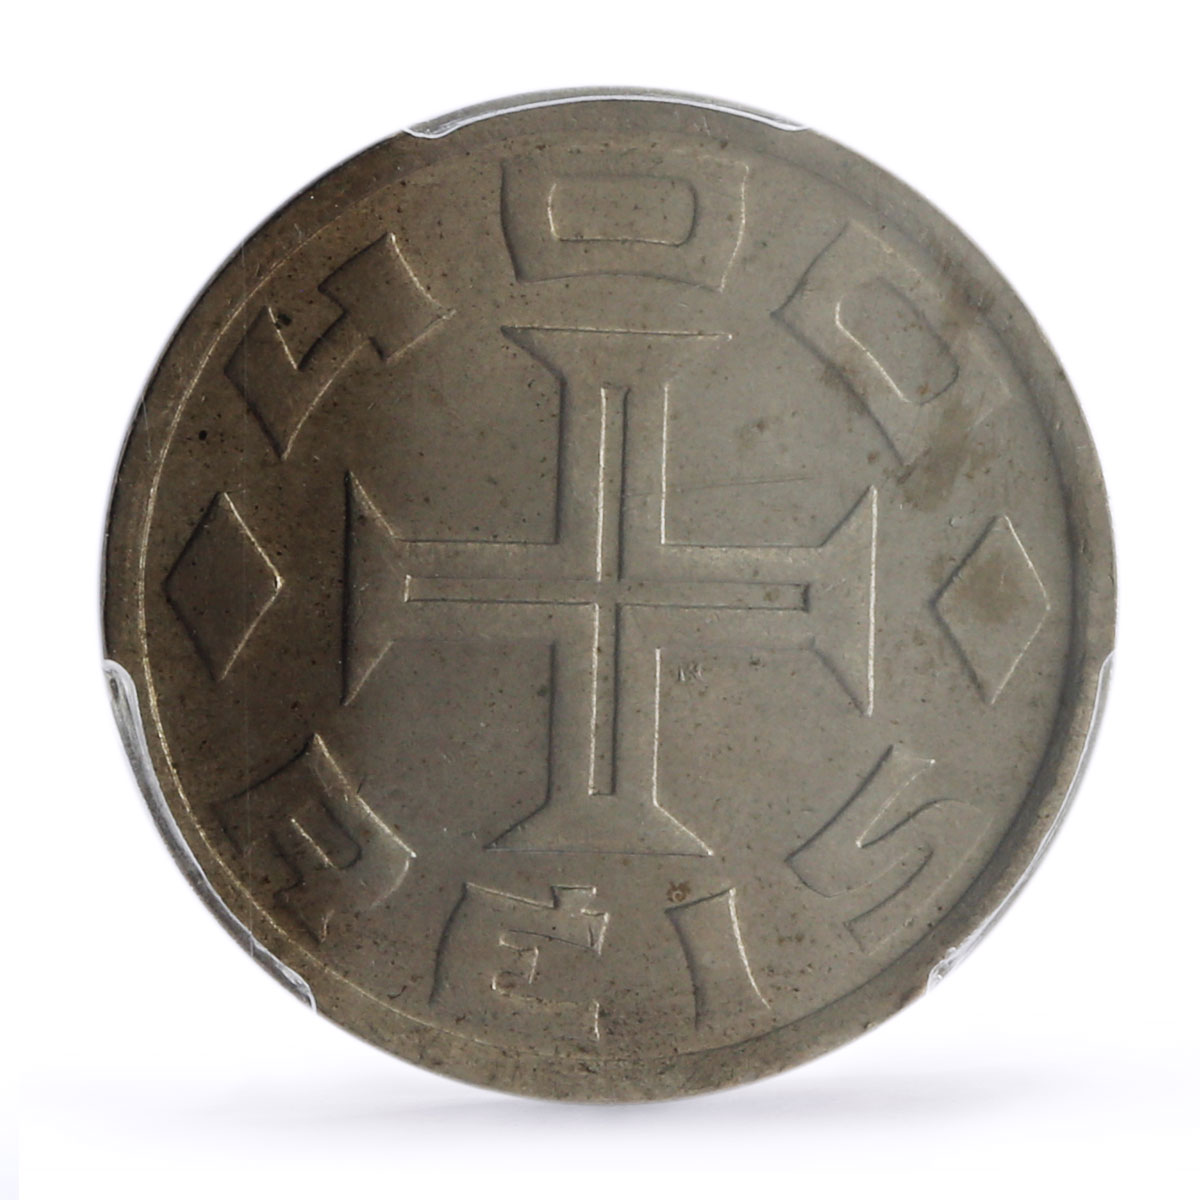 Brazil 400 reis 400 Years Colonization Lusinian Cross MS64 PCGS CuNi coin 1932